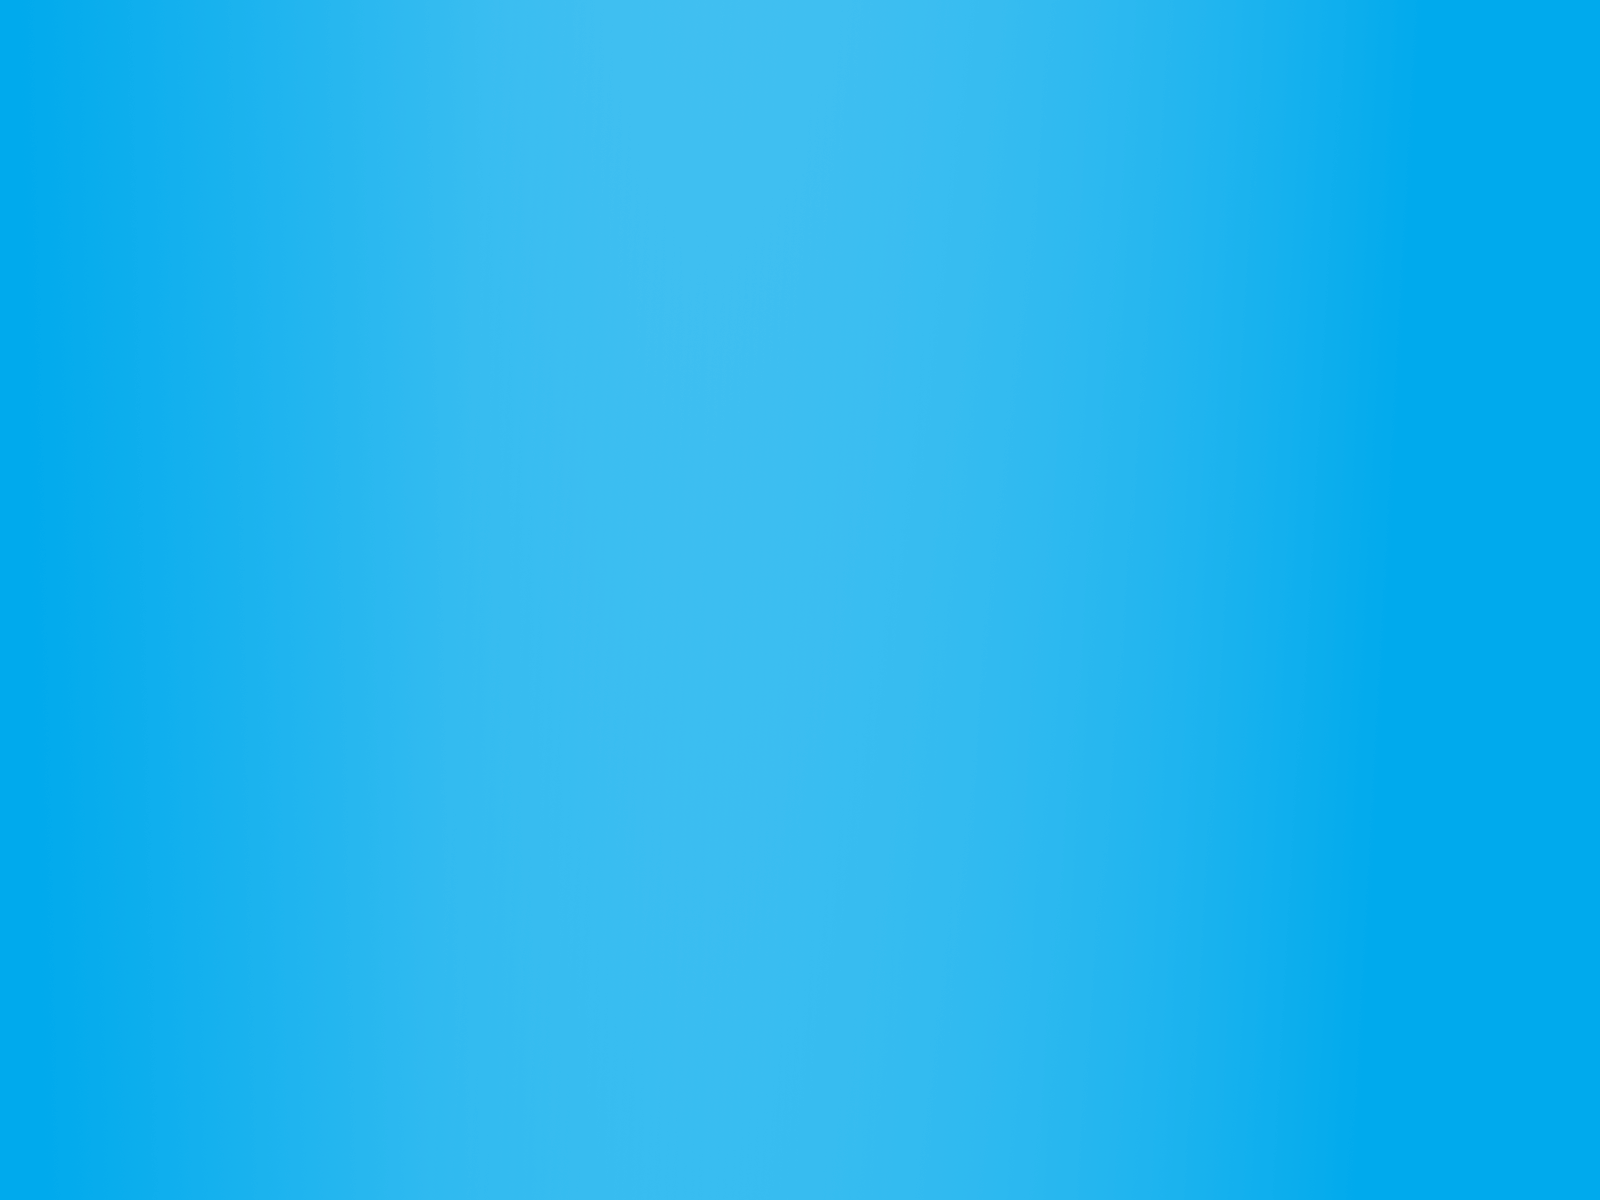 Solid Light Blu HD Wallpaper, Background Image